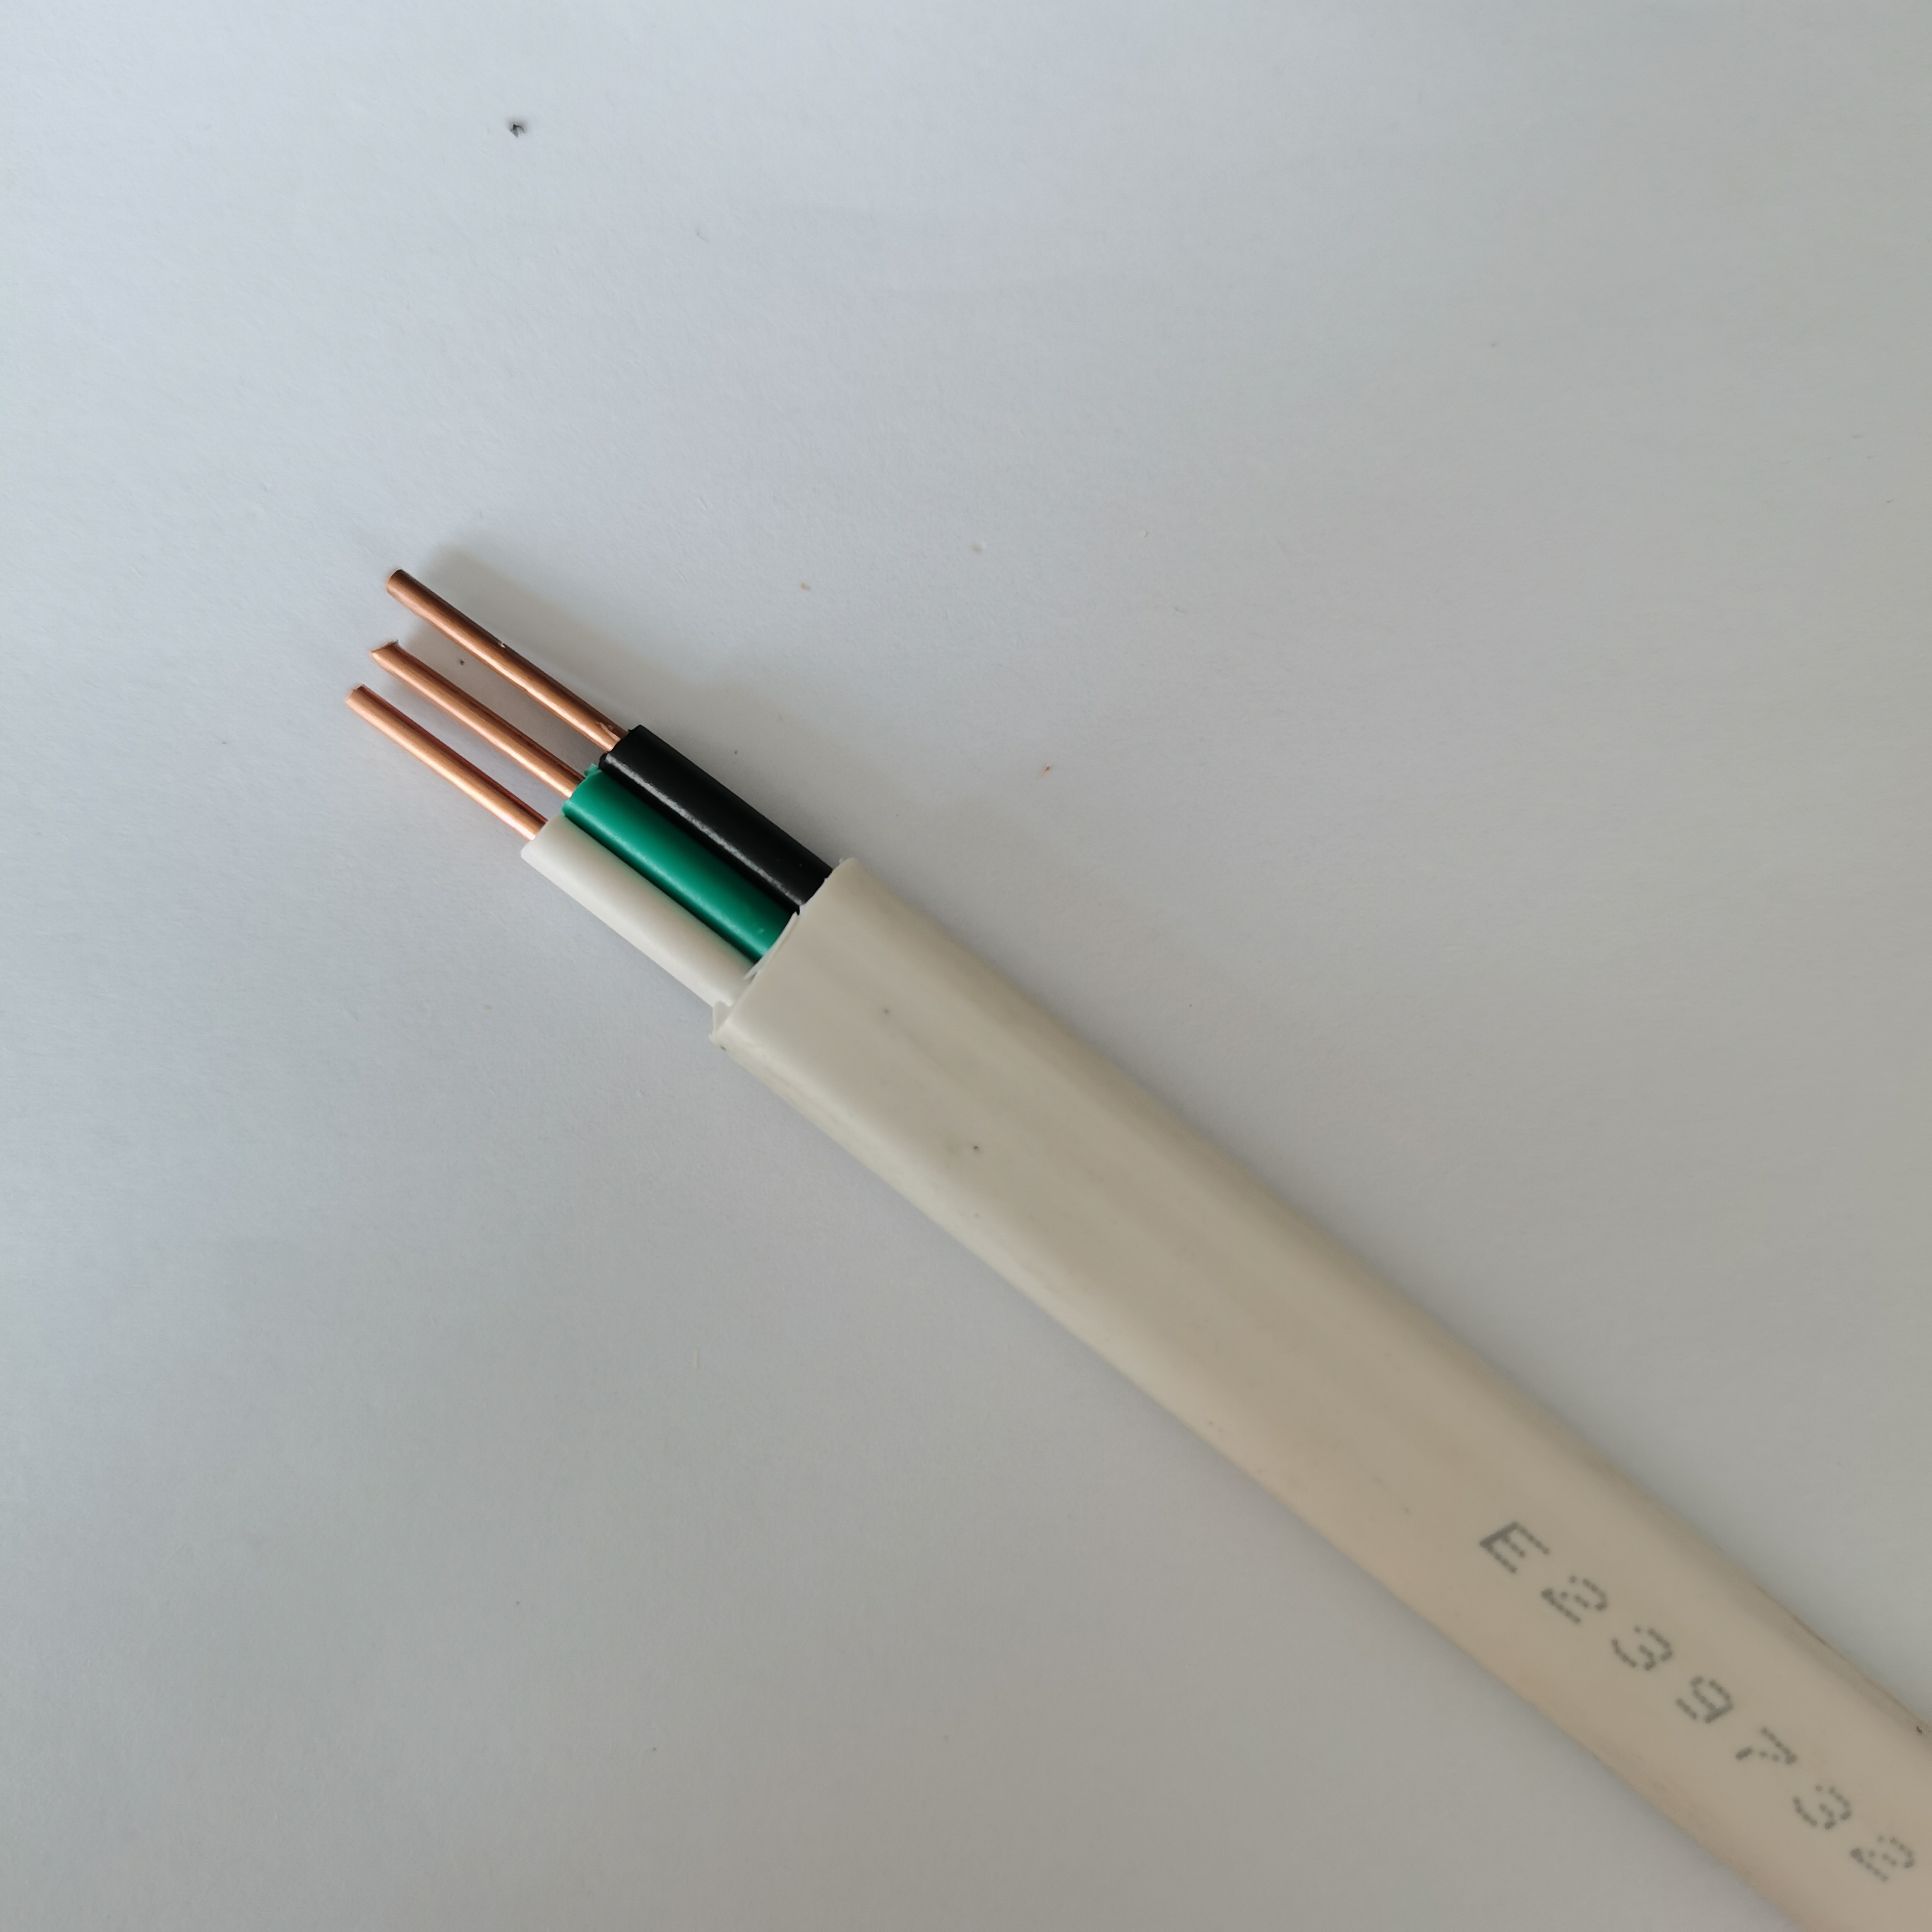 UL2587电缆 阻燃电线 绝缘电线 温美标电缆